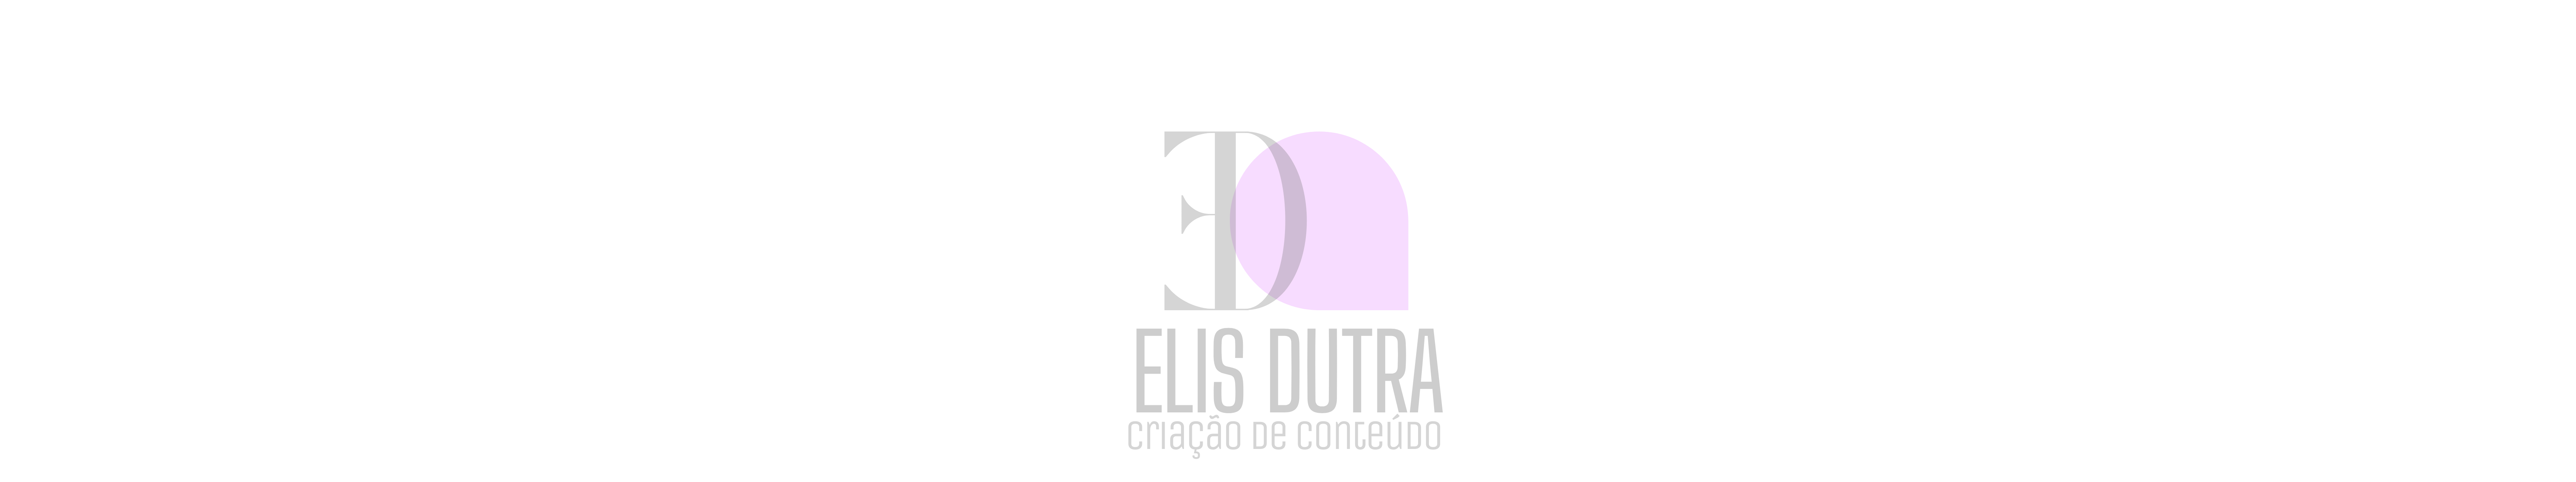 ELISÂNGELA DUTRA's profile banner